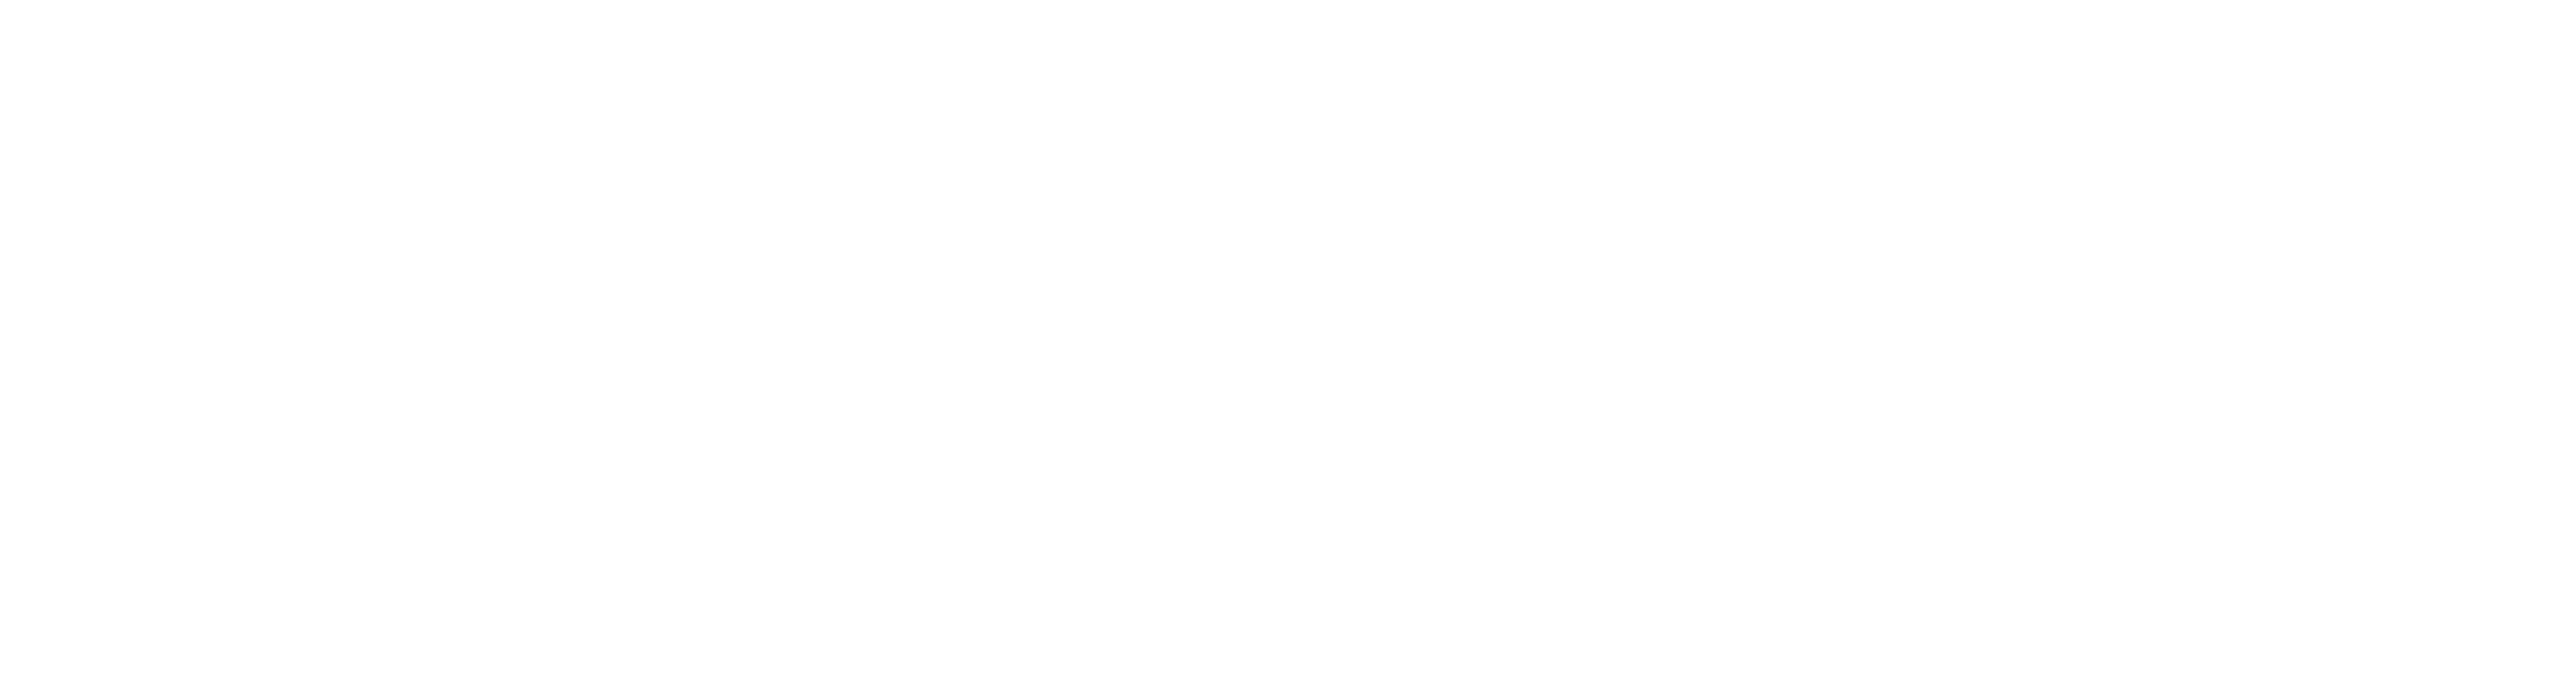 NextGenerationUE